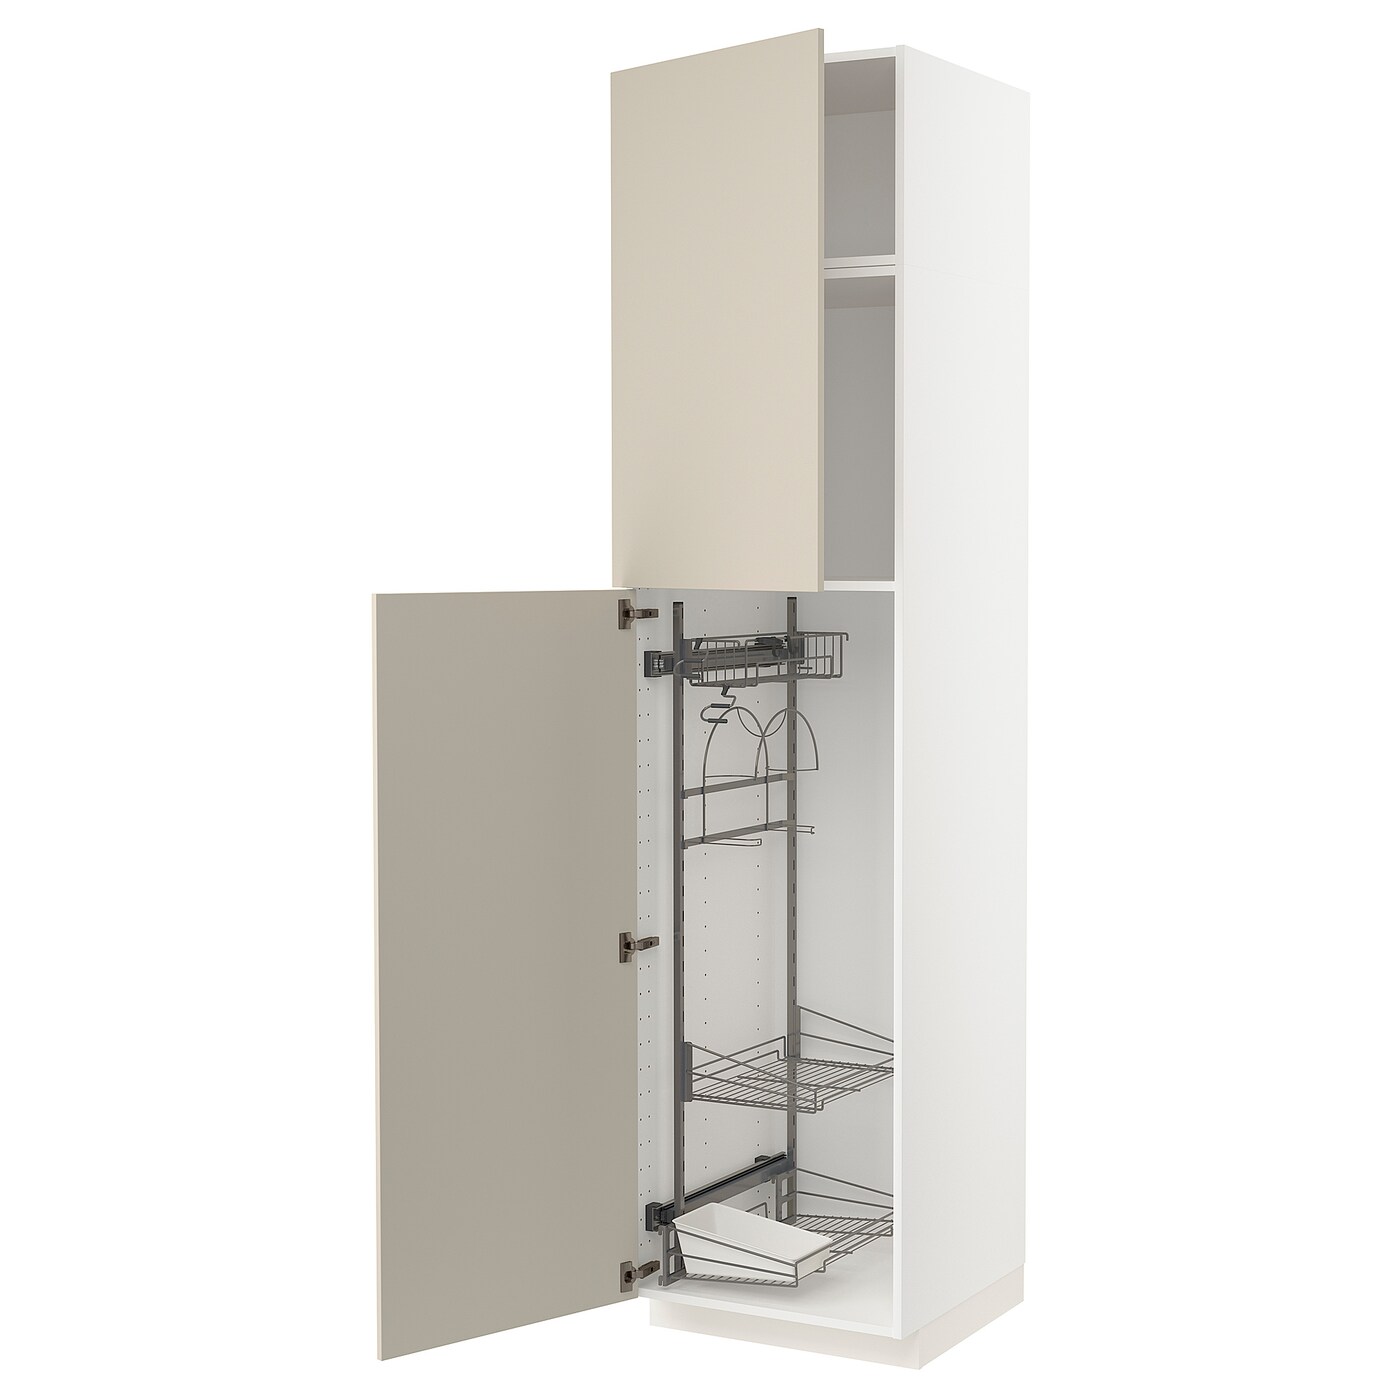 Высокий шкаф/бытовой - IKEA METOD/МЕТОД ИКЕА, 240х60х60 см, белый/бежевый